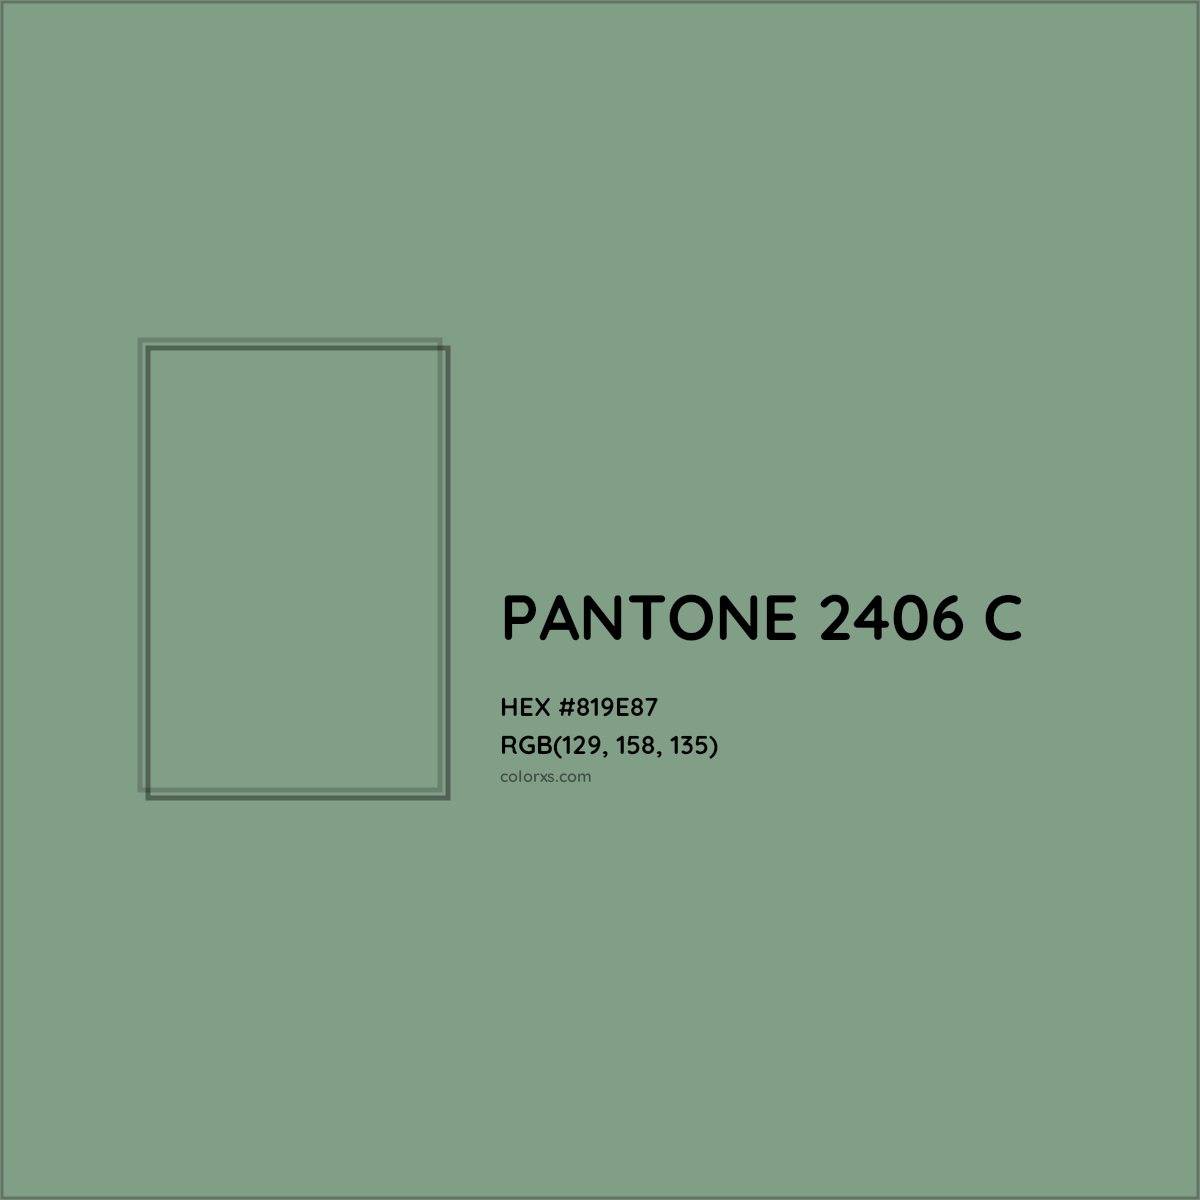 HEX #819E87 PANTONE 2406 C CMS Pantone PMS - Color Code